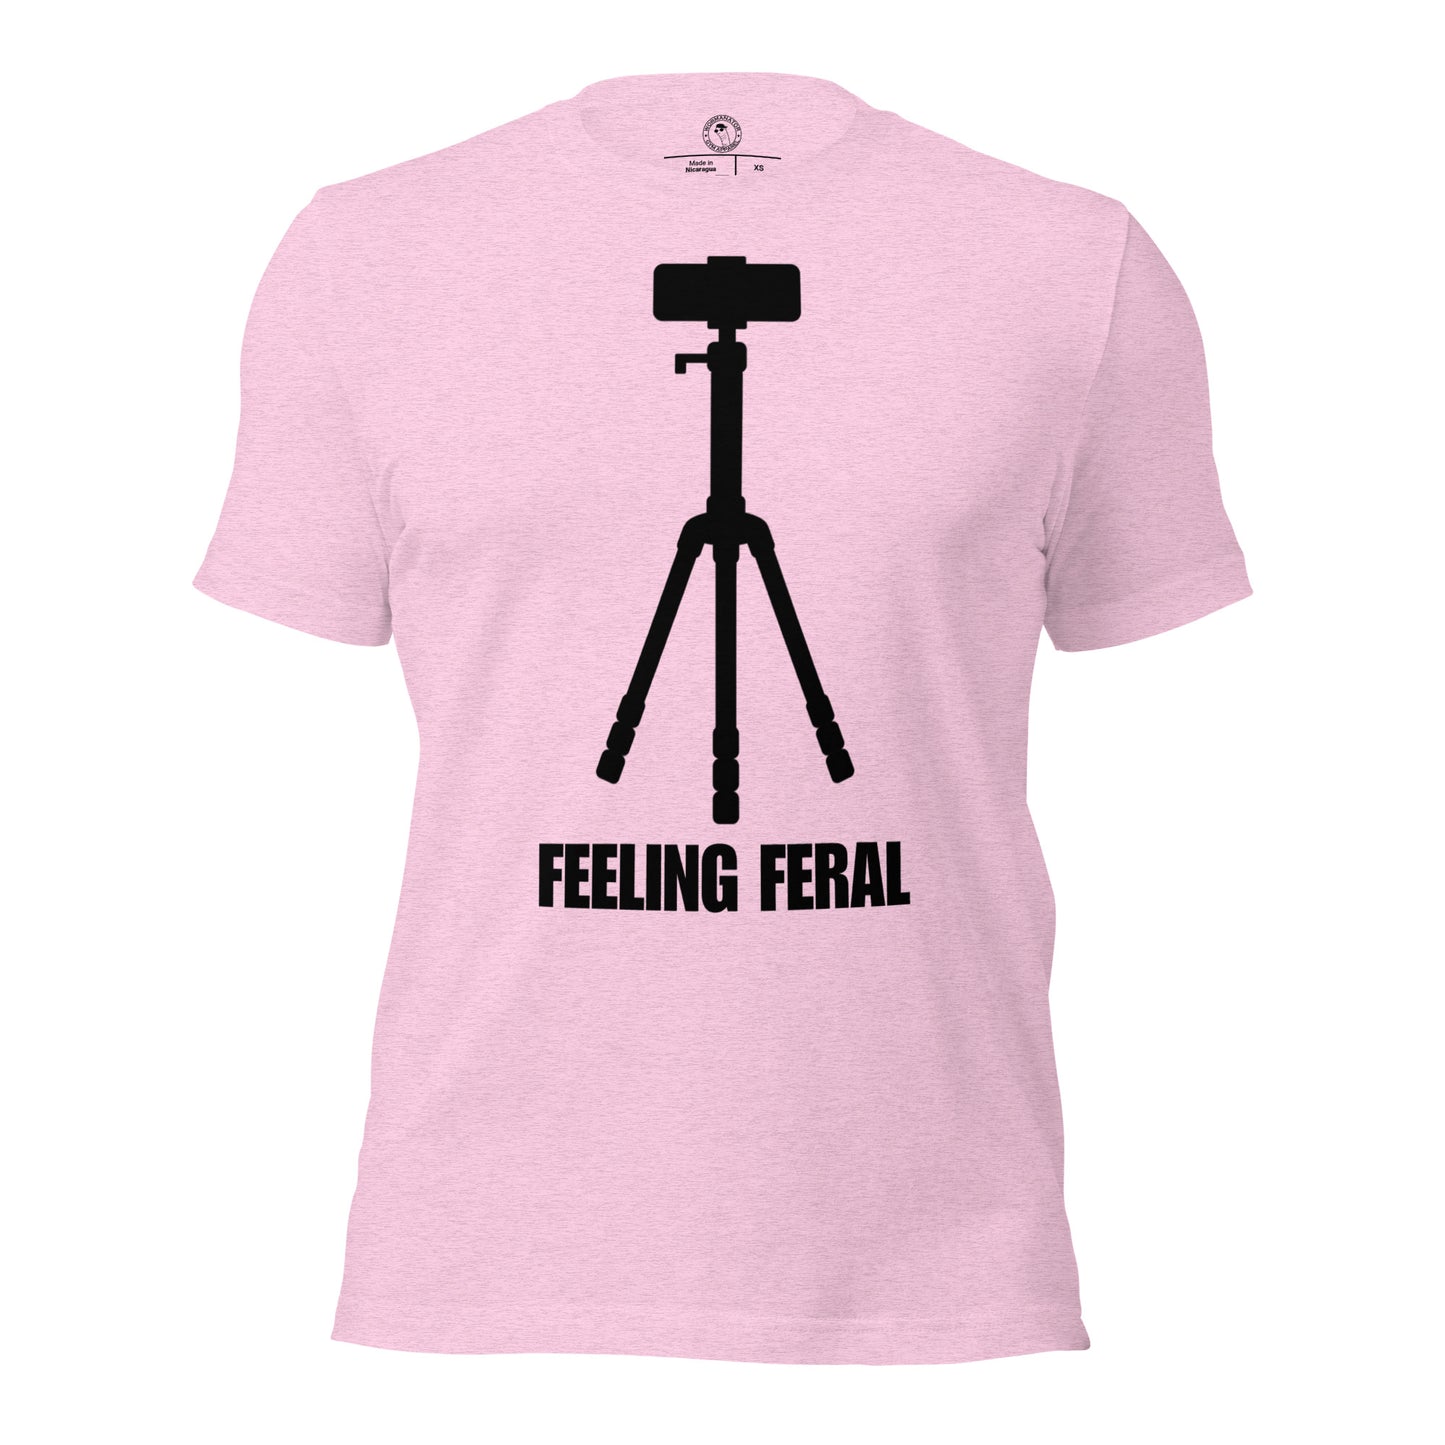 Feeling Feral Gym Shirt in Heather Prism Lilac